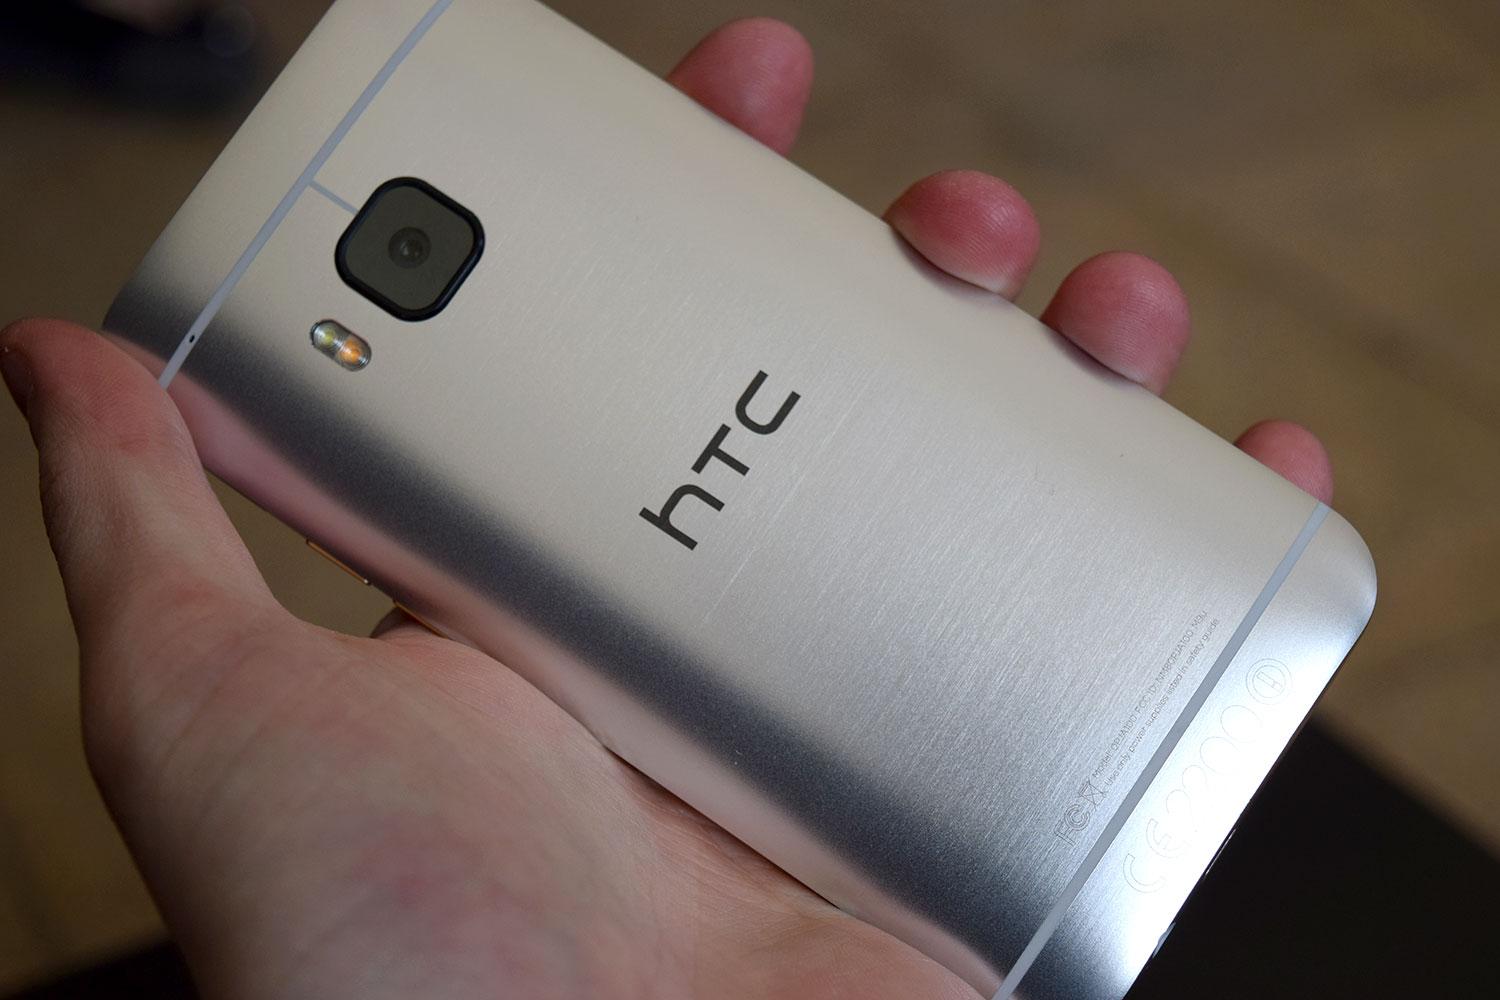 HTC One M9 back angle